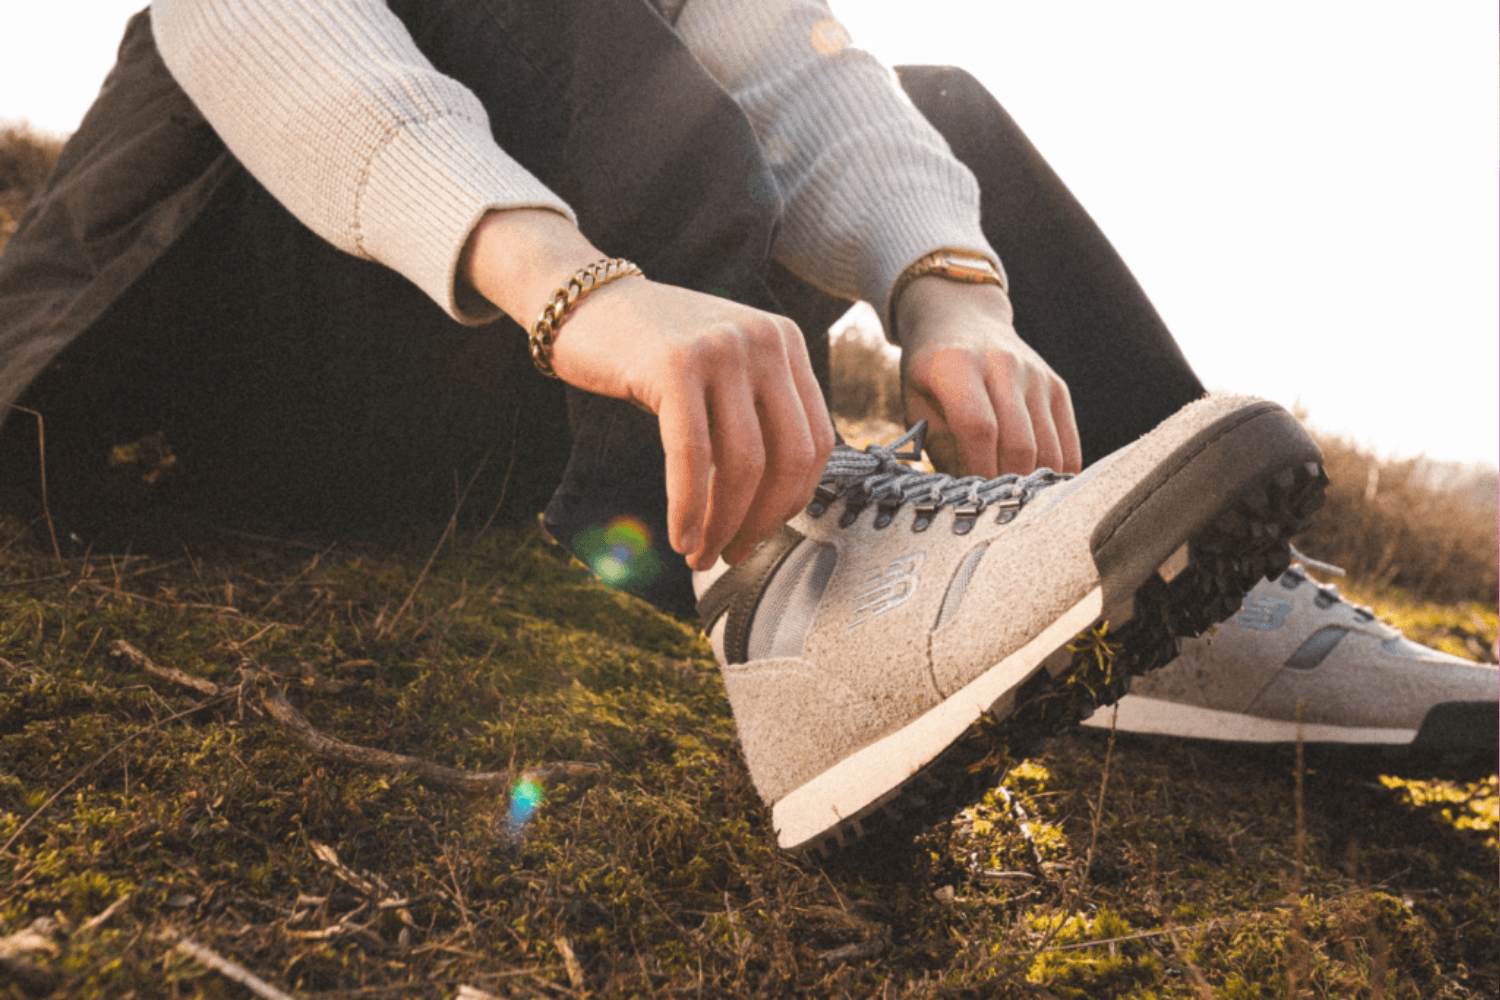 New Balance Rainier: the perfect outdoor shoe?